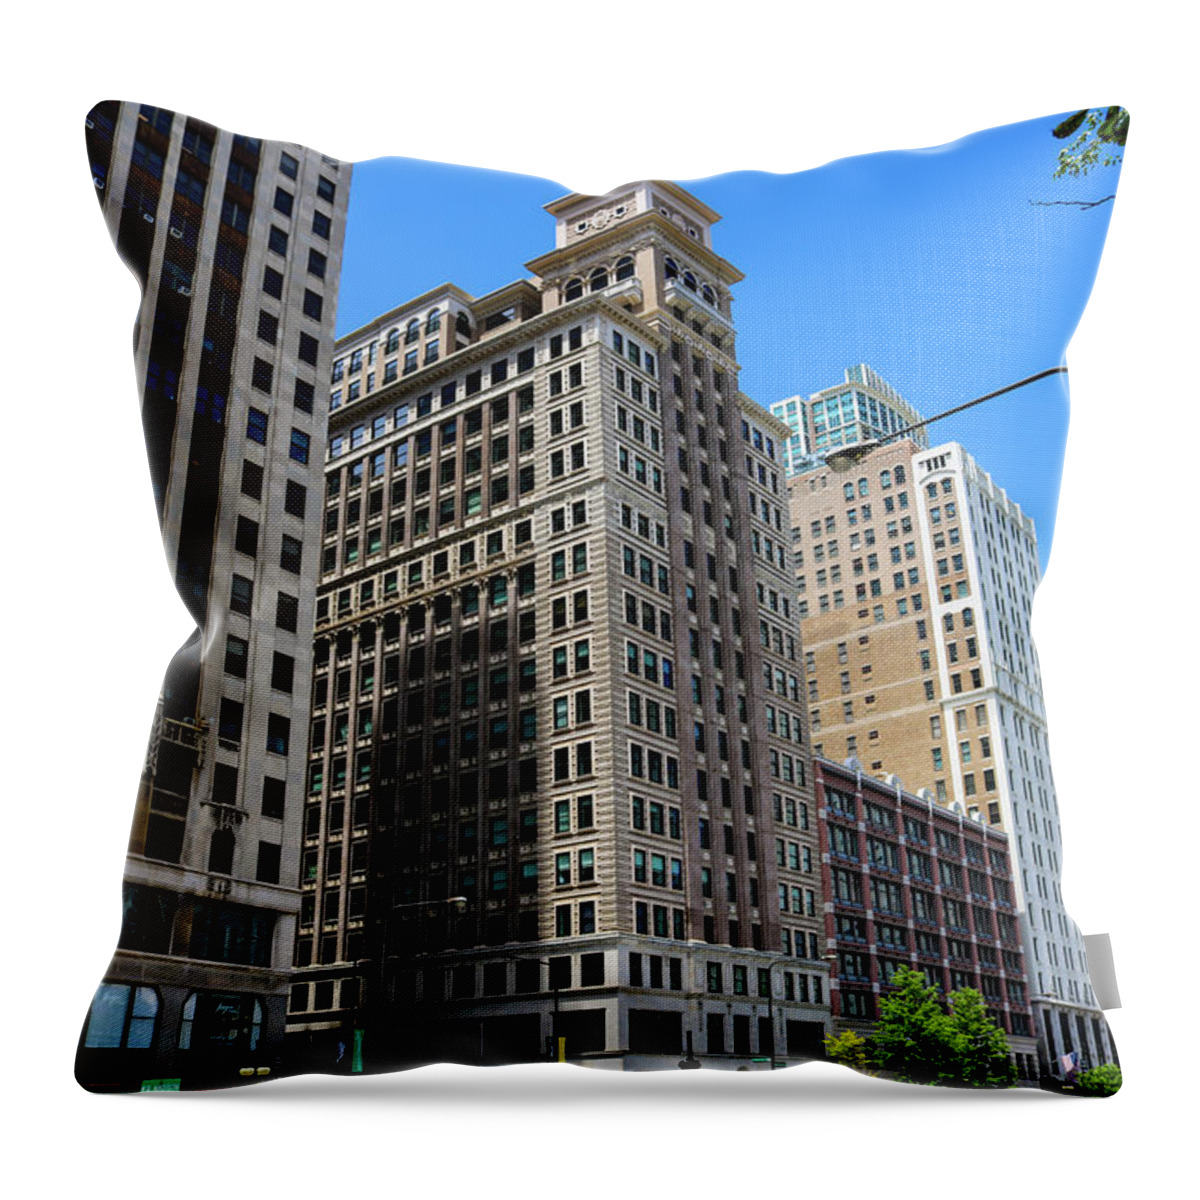 Montgomery Ward Building Throw Pillow featuring the photograph Montgomery Ward Building by Britten Adams